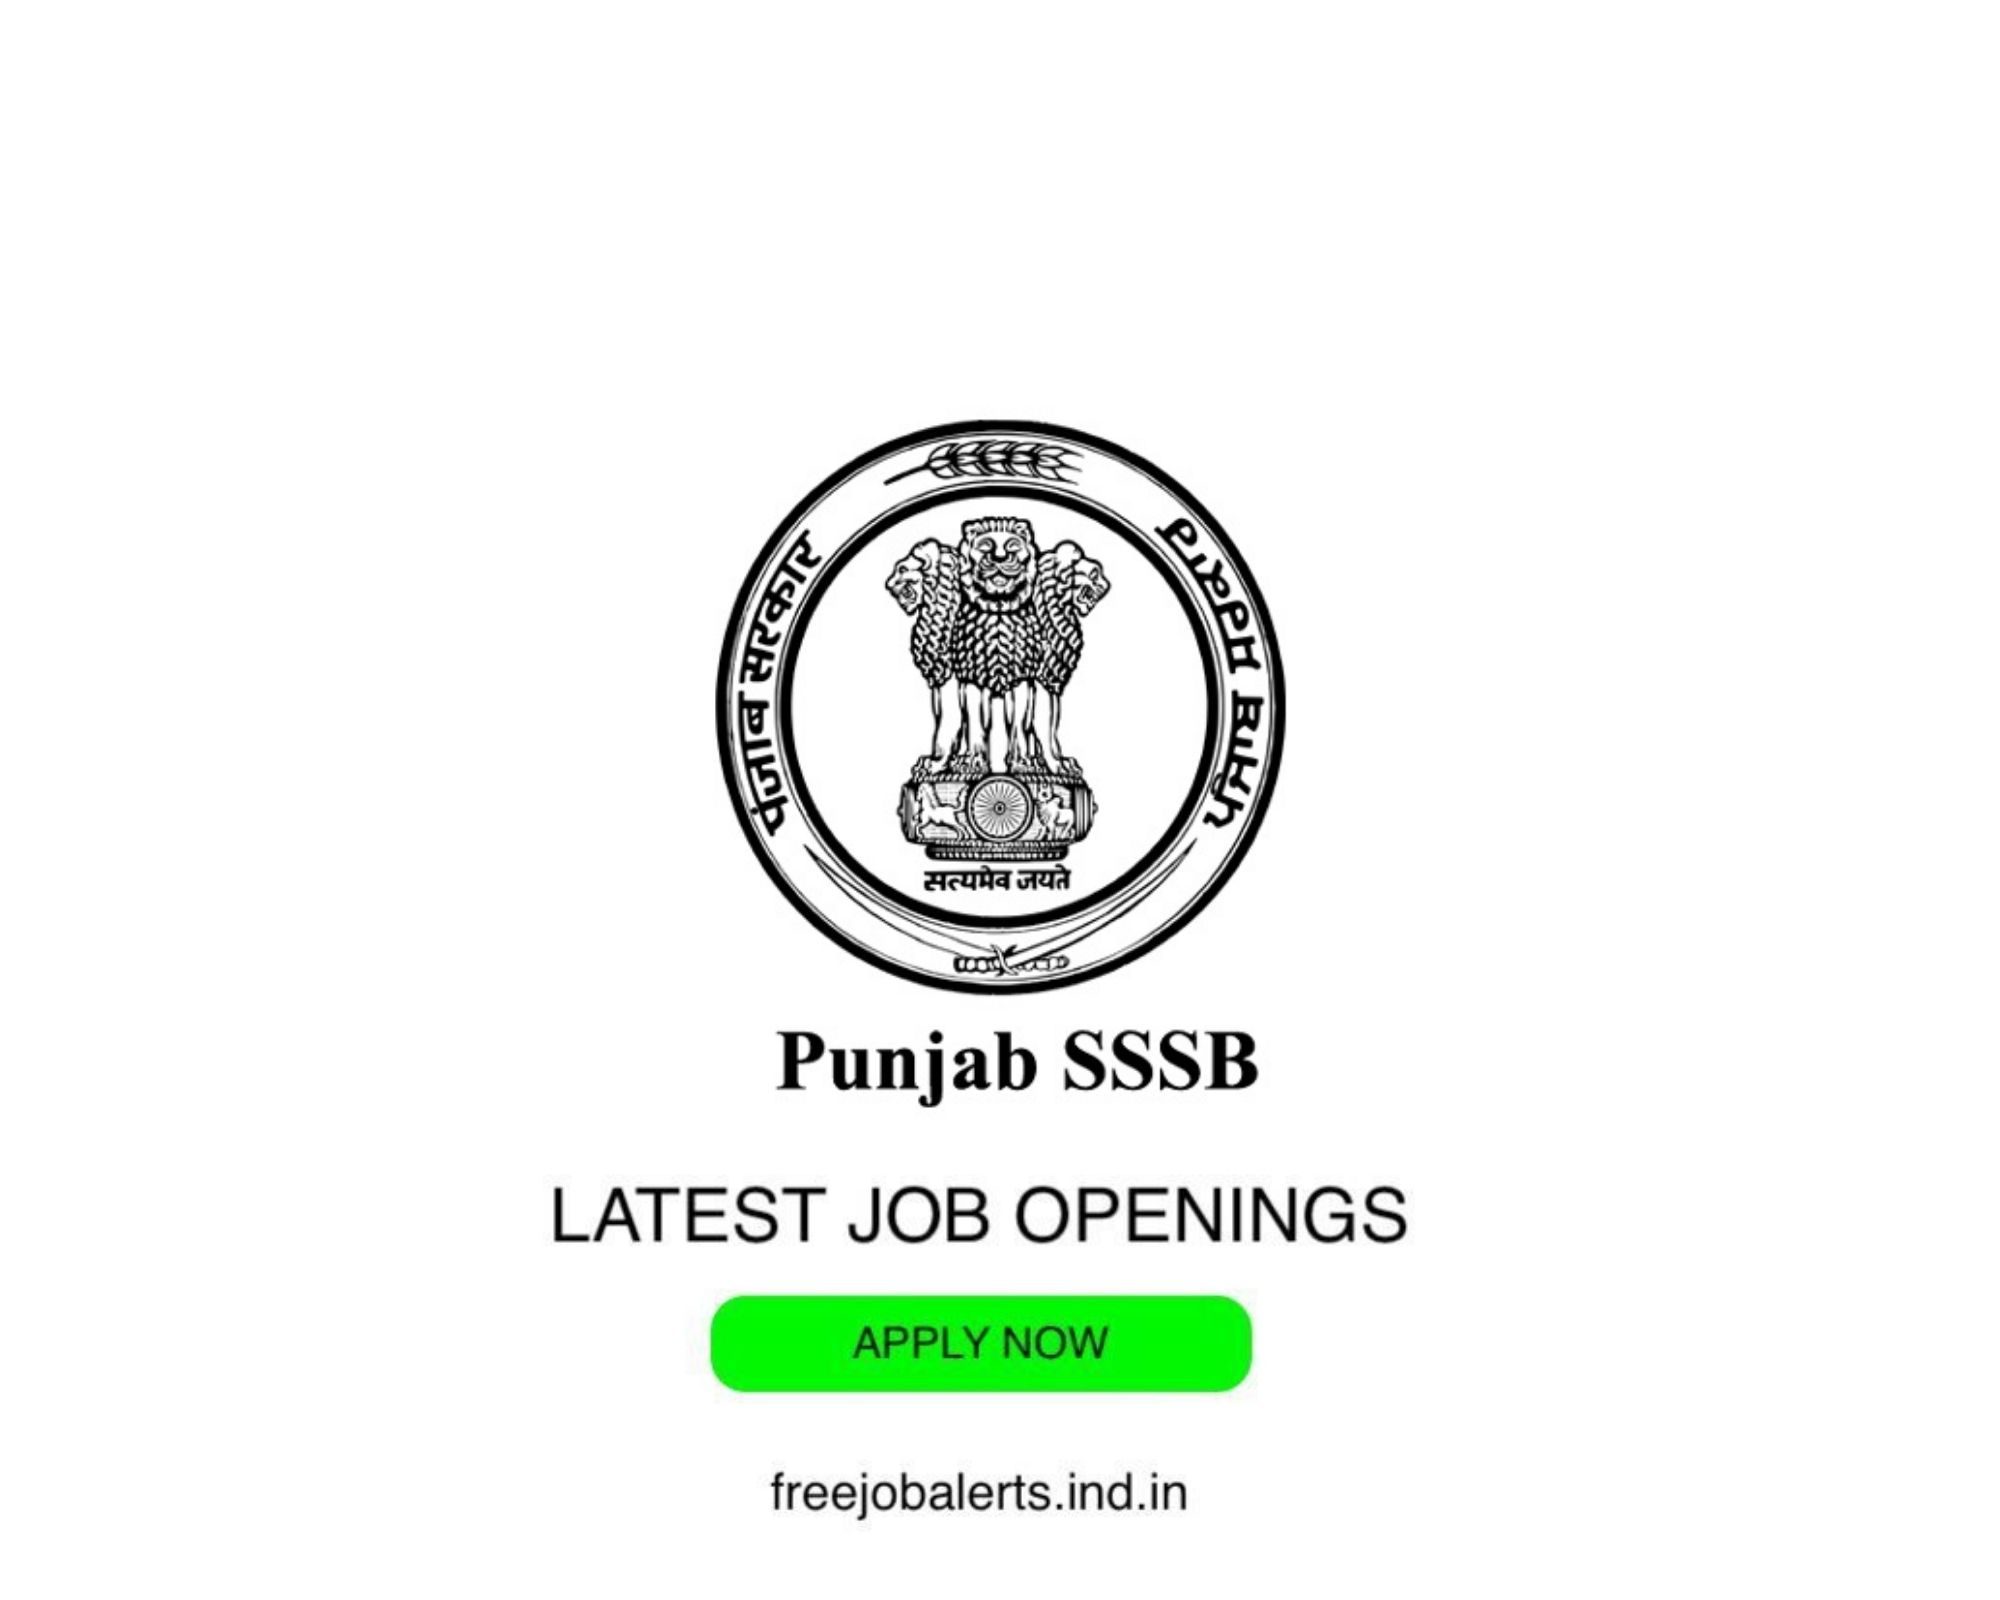 PSSSB- Punjab Subordinate Services Selection Board- Latest Govt job openings - Free job alerts, Indian Govt Jobs